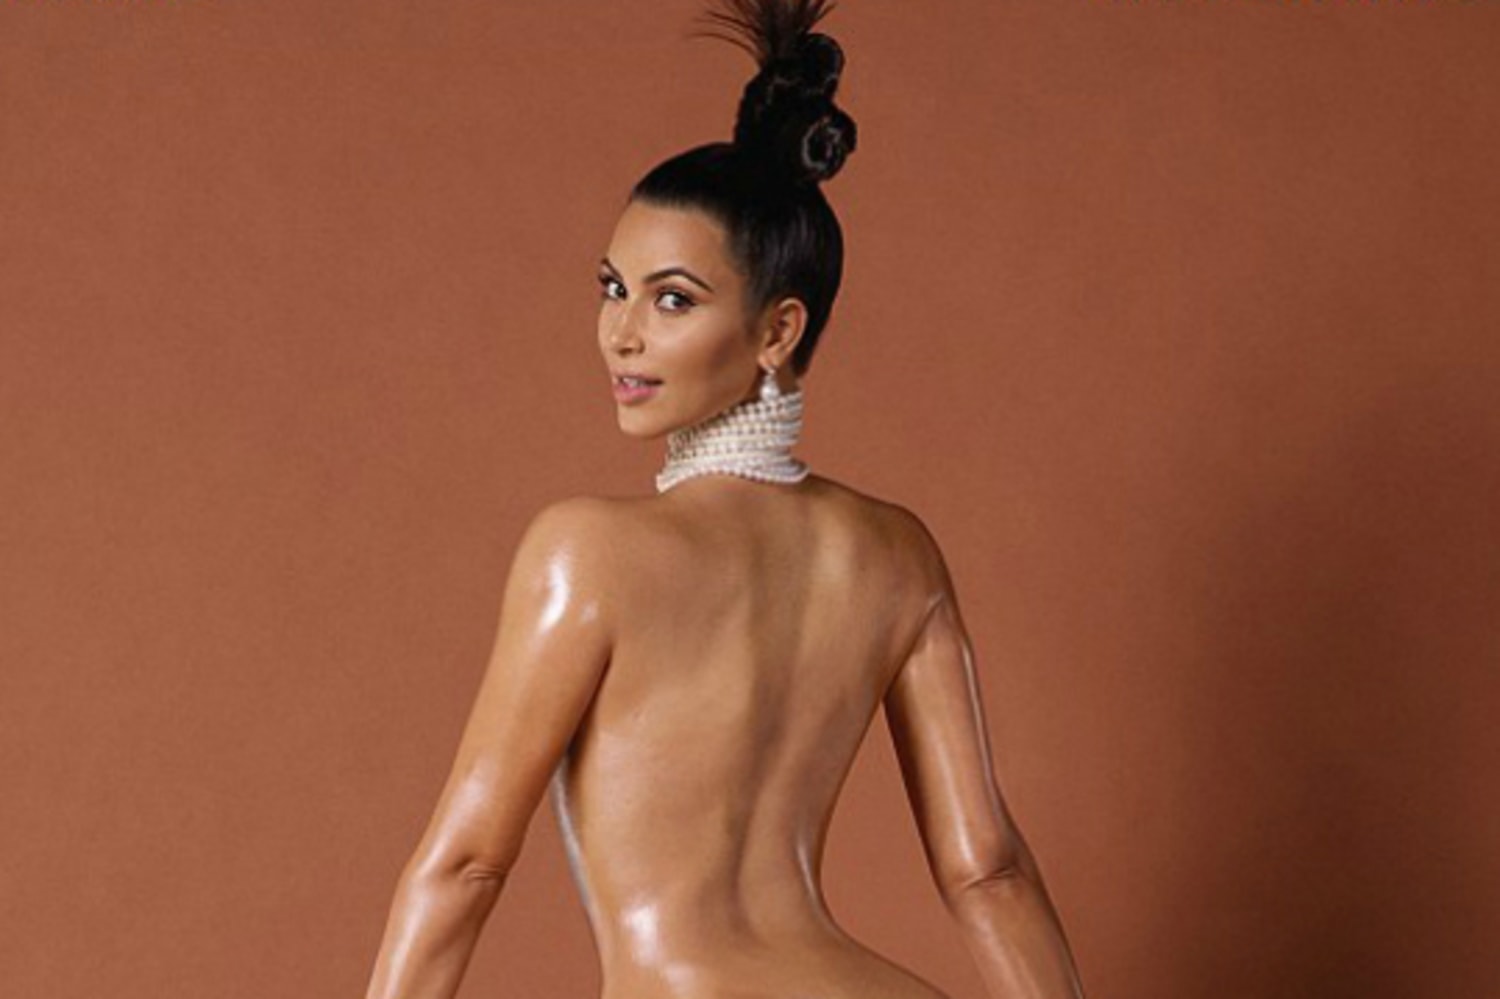 Is Kim Kardashian's butt-centric photoshoot offensive?